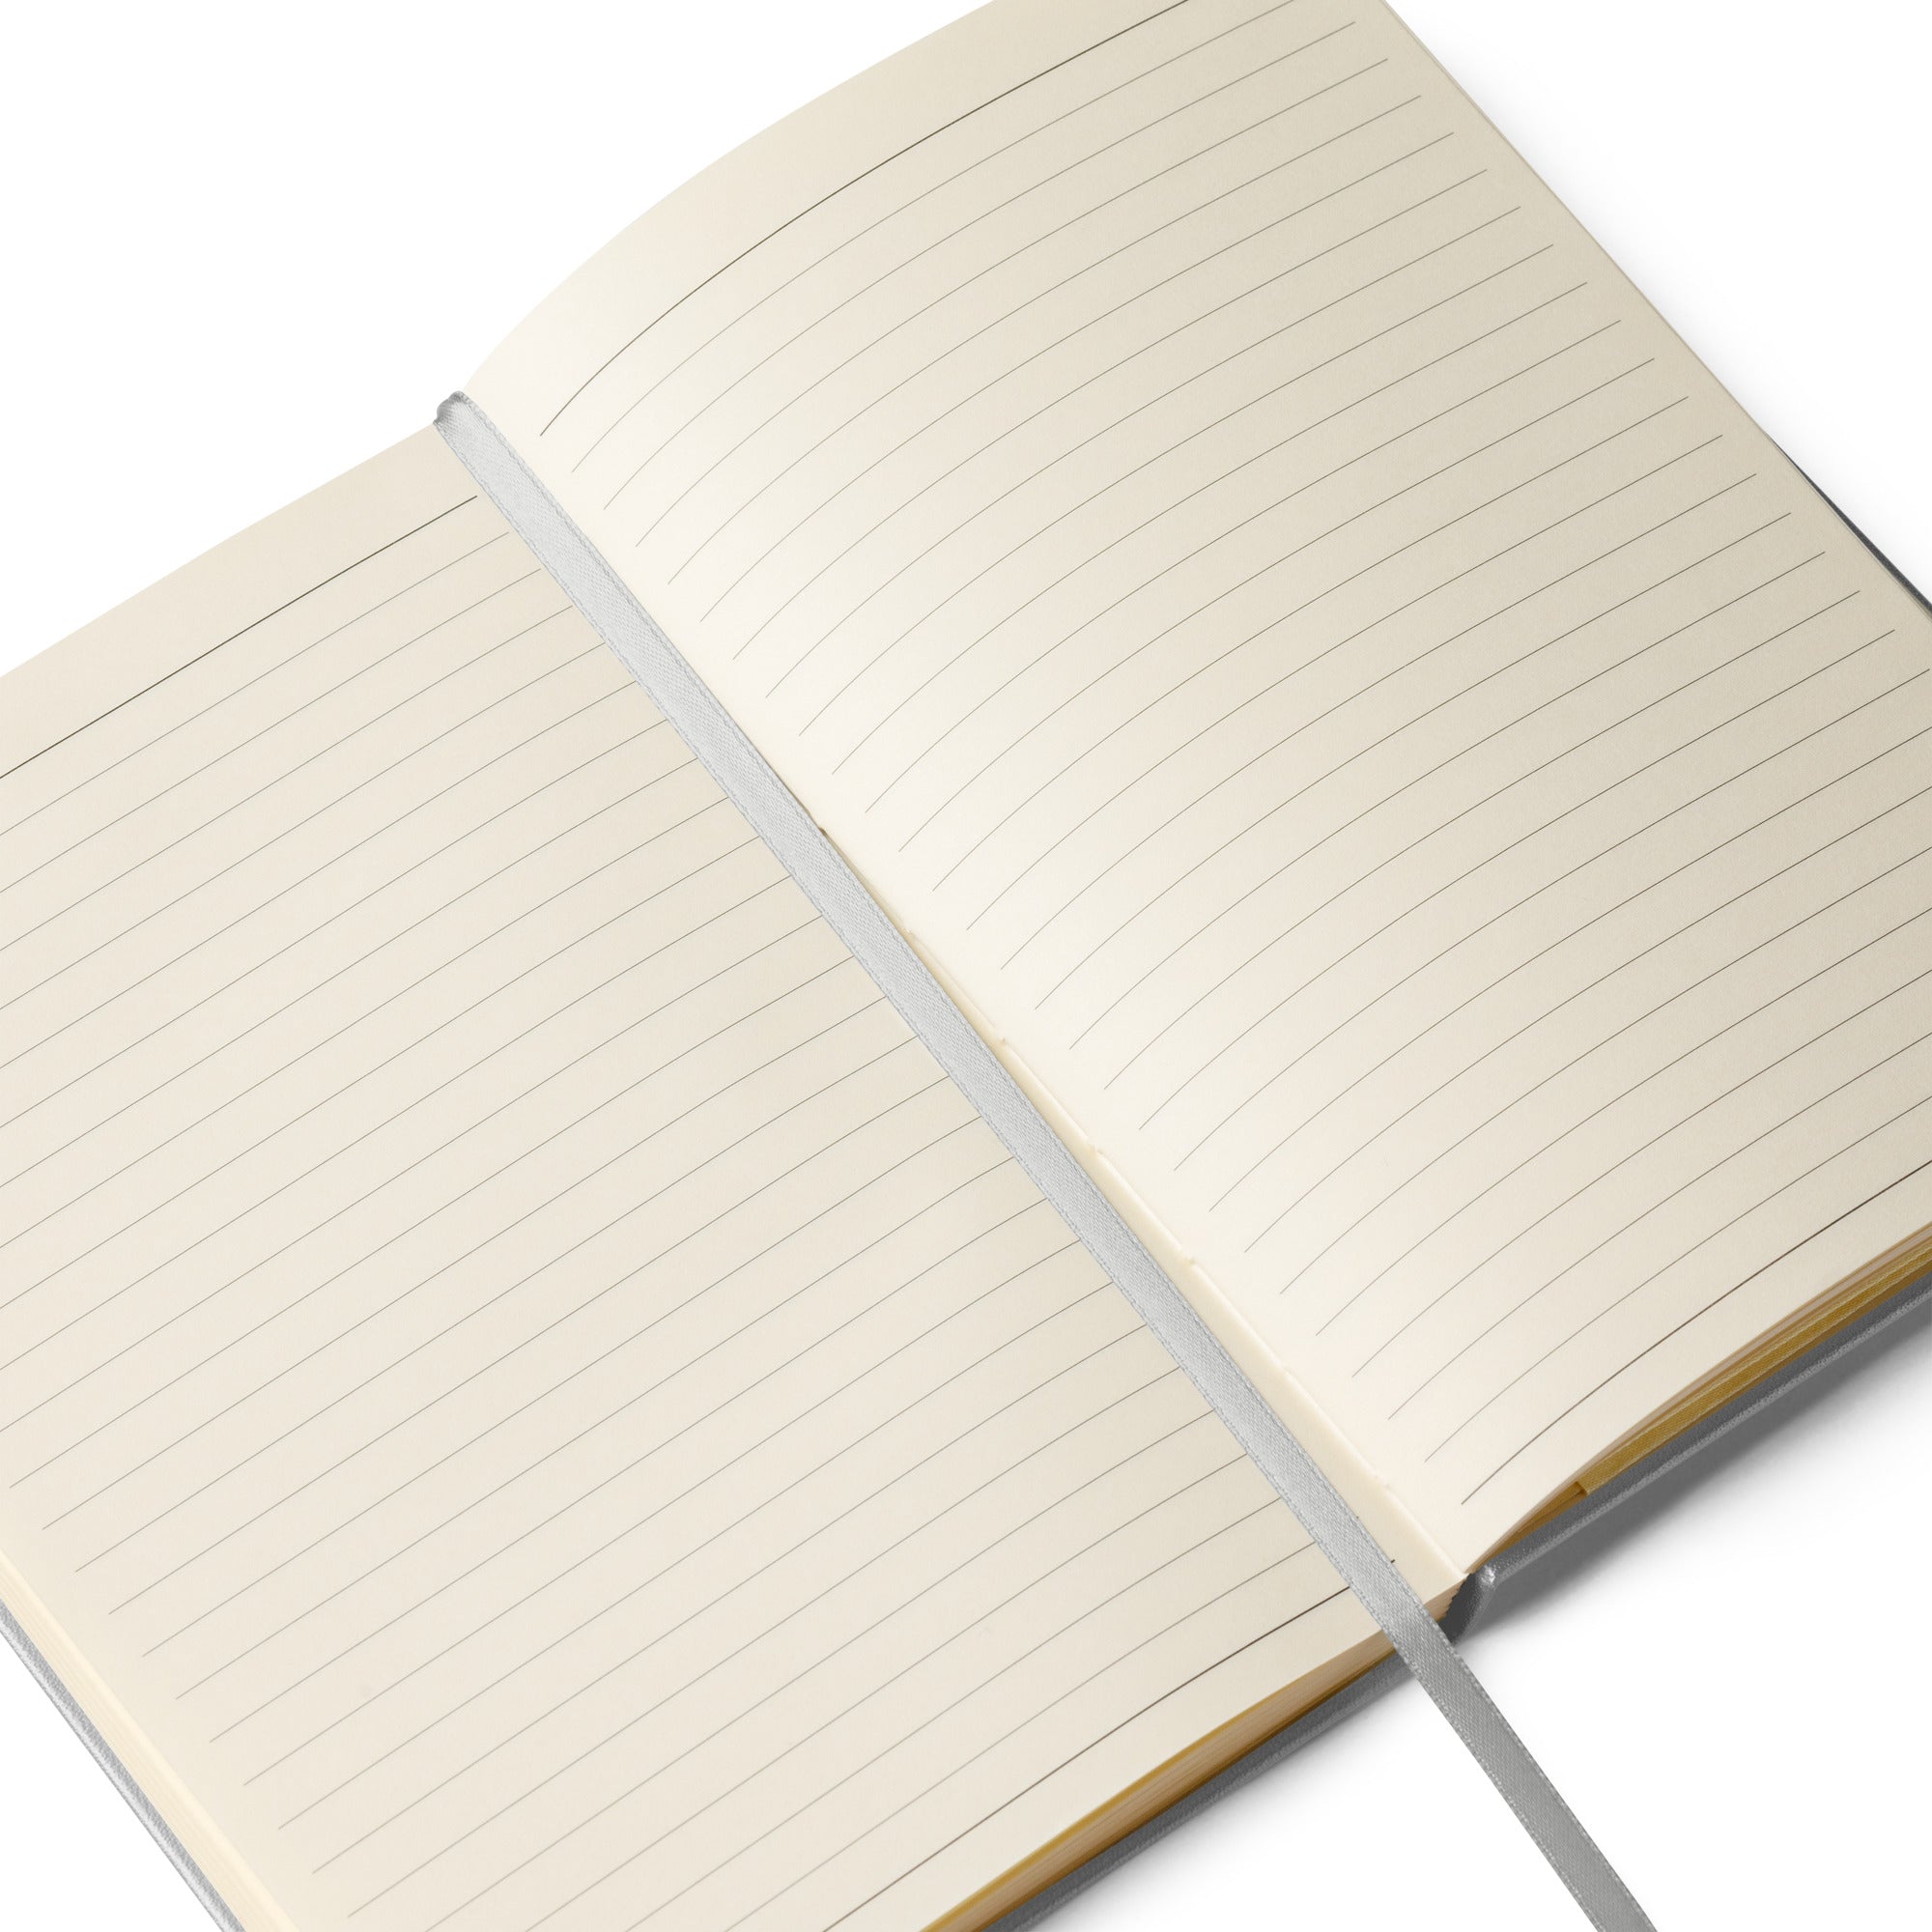 Tom Hardcover bound notebook